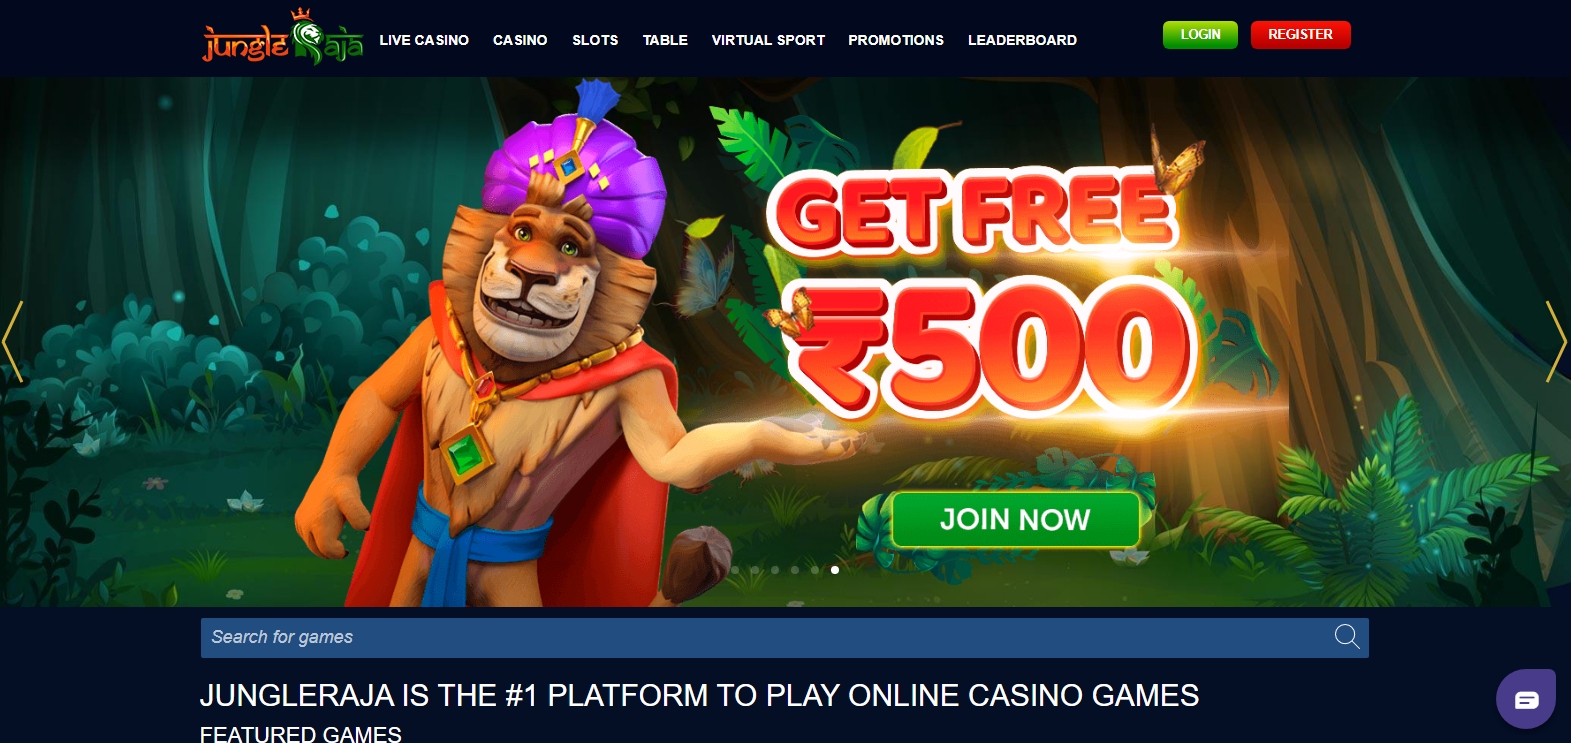 Jungle raja online casino 1